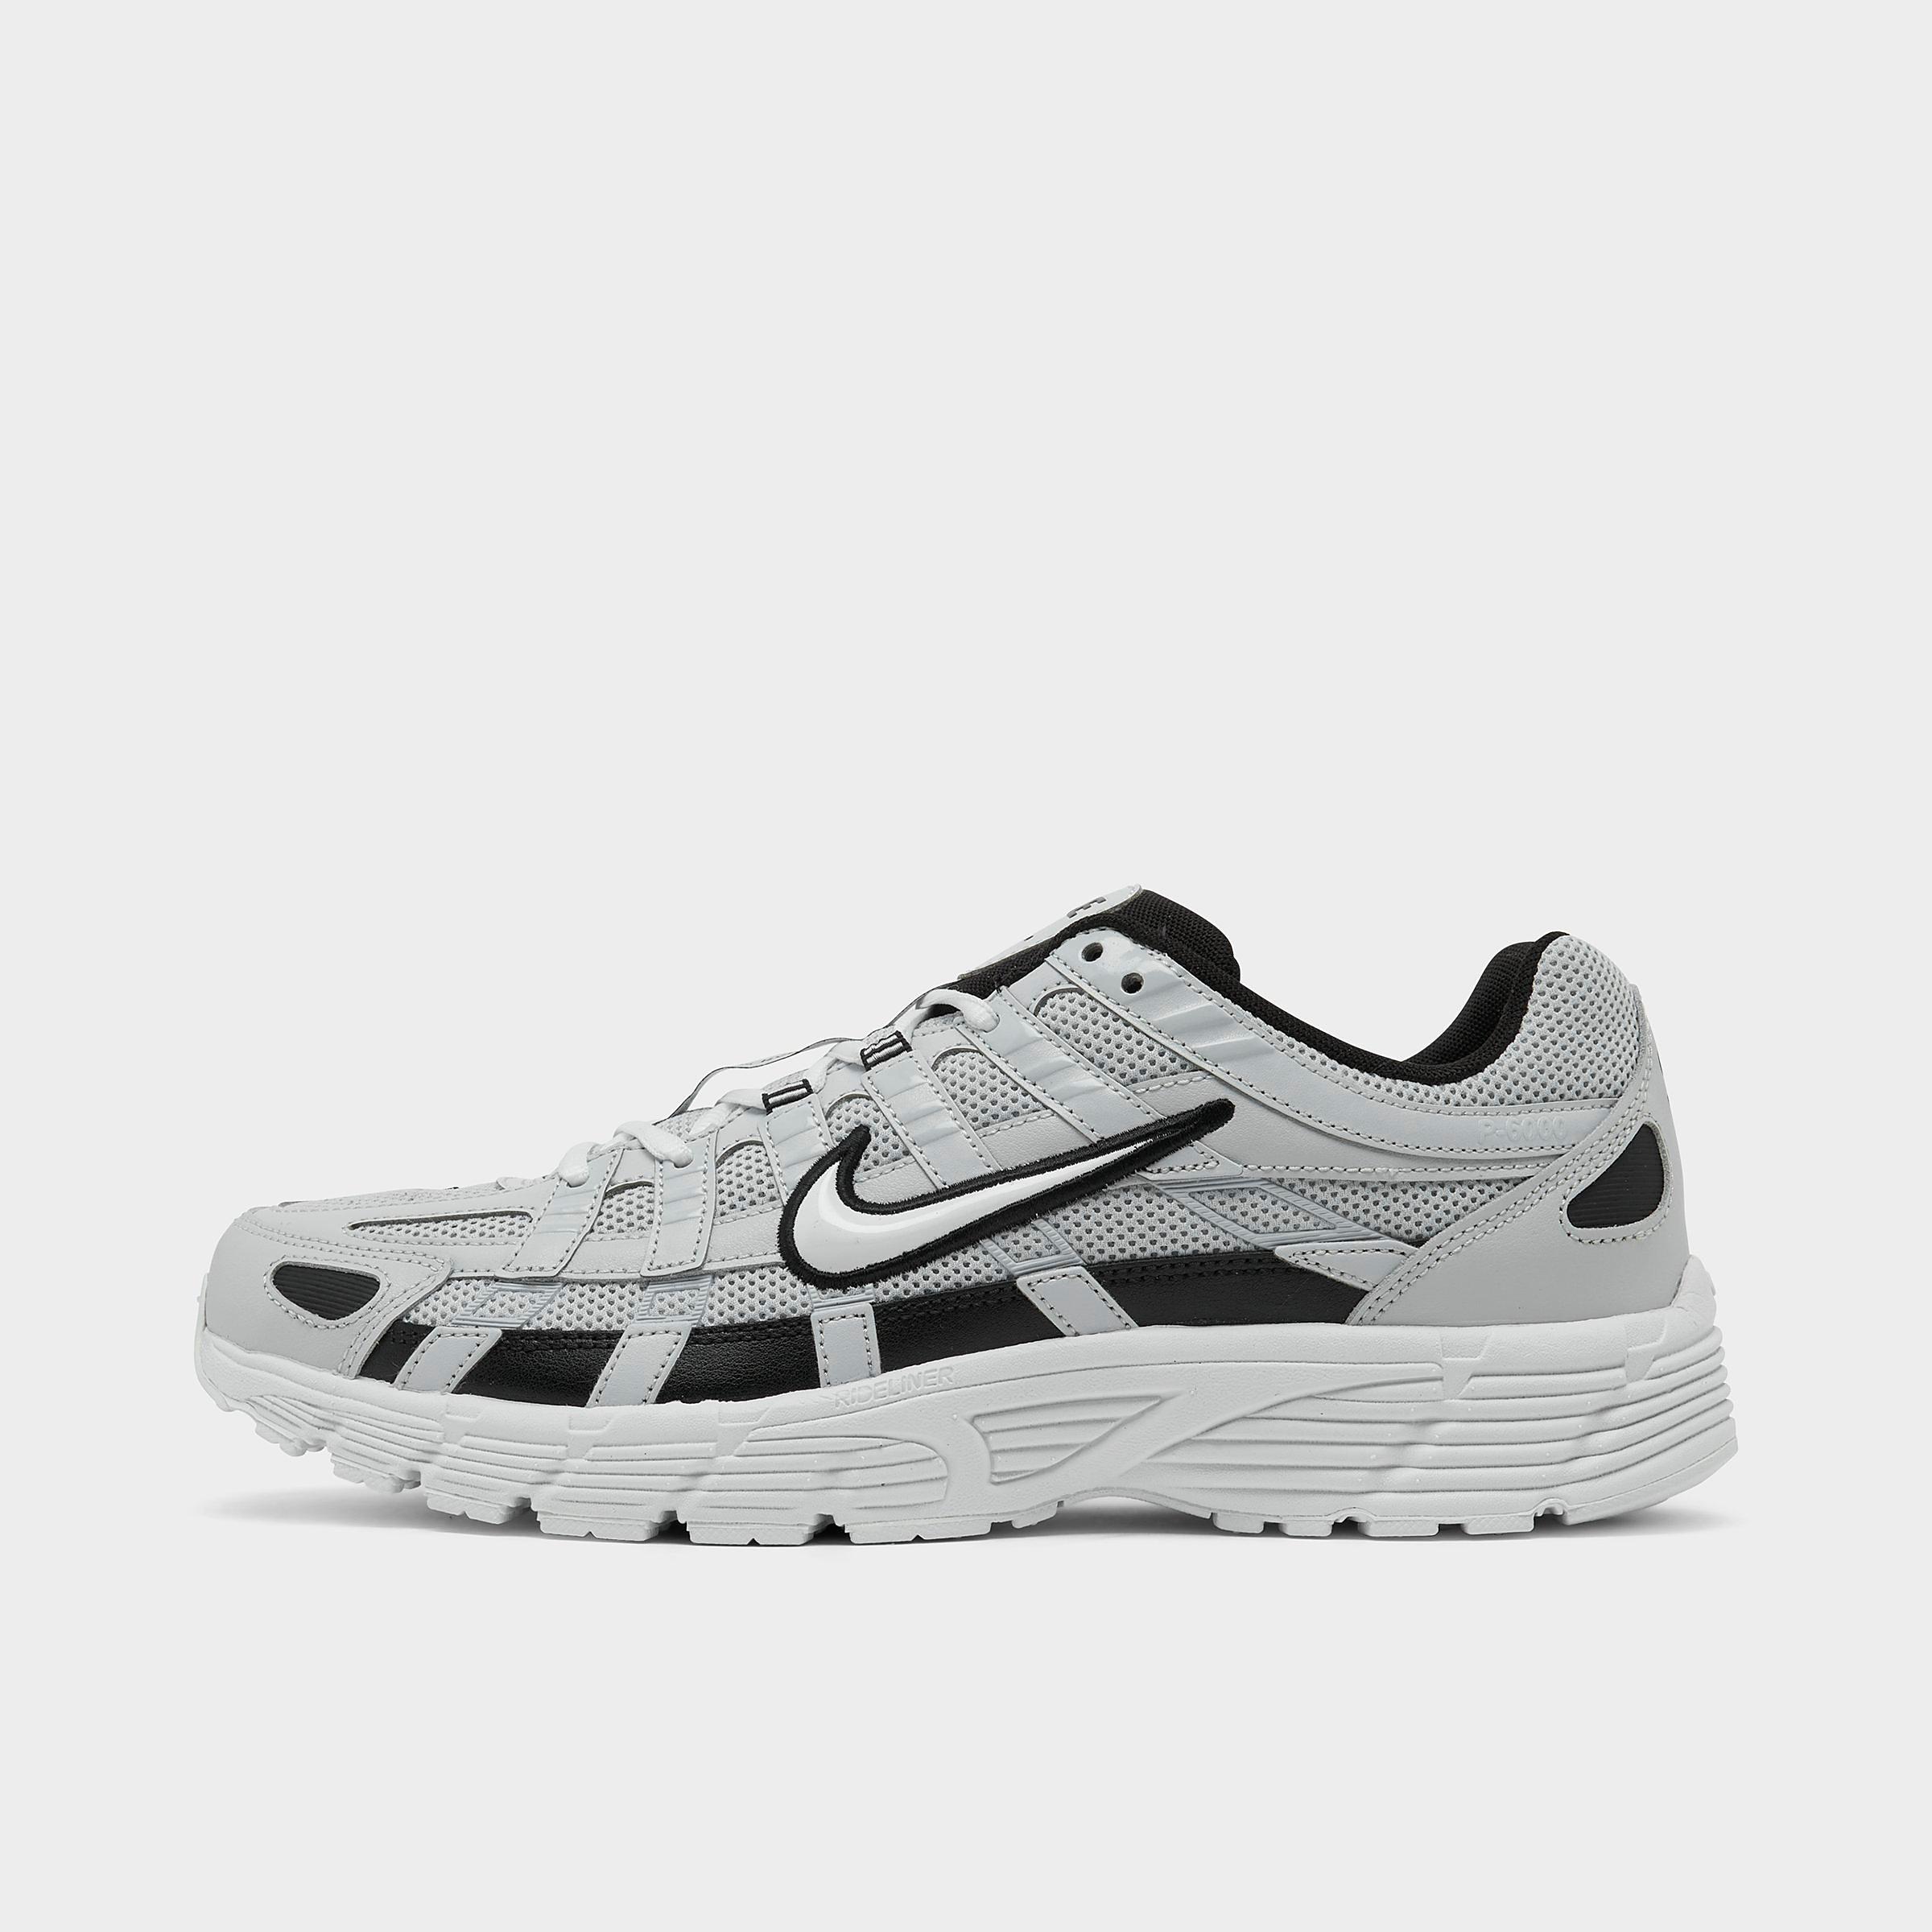 Nike P-6000 Running Shoes